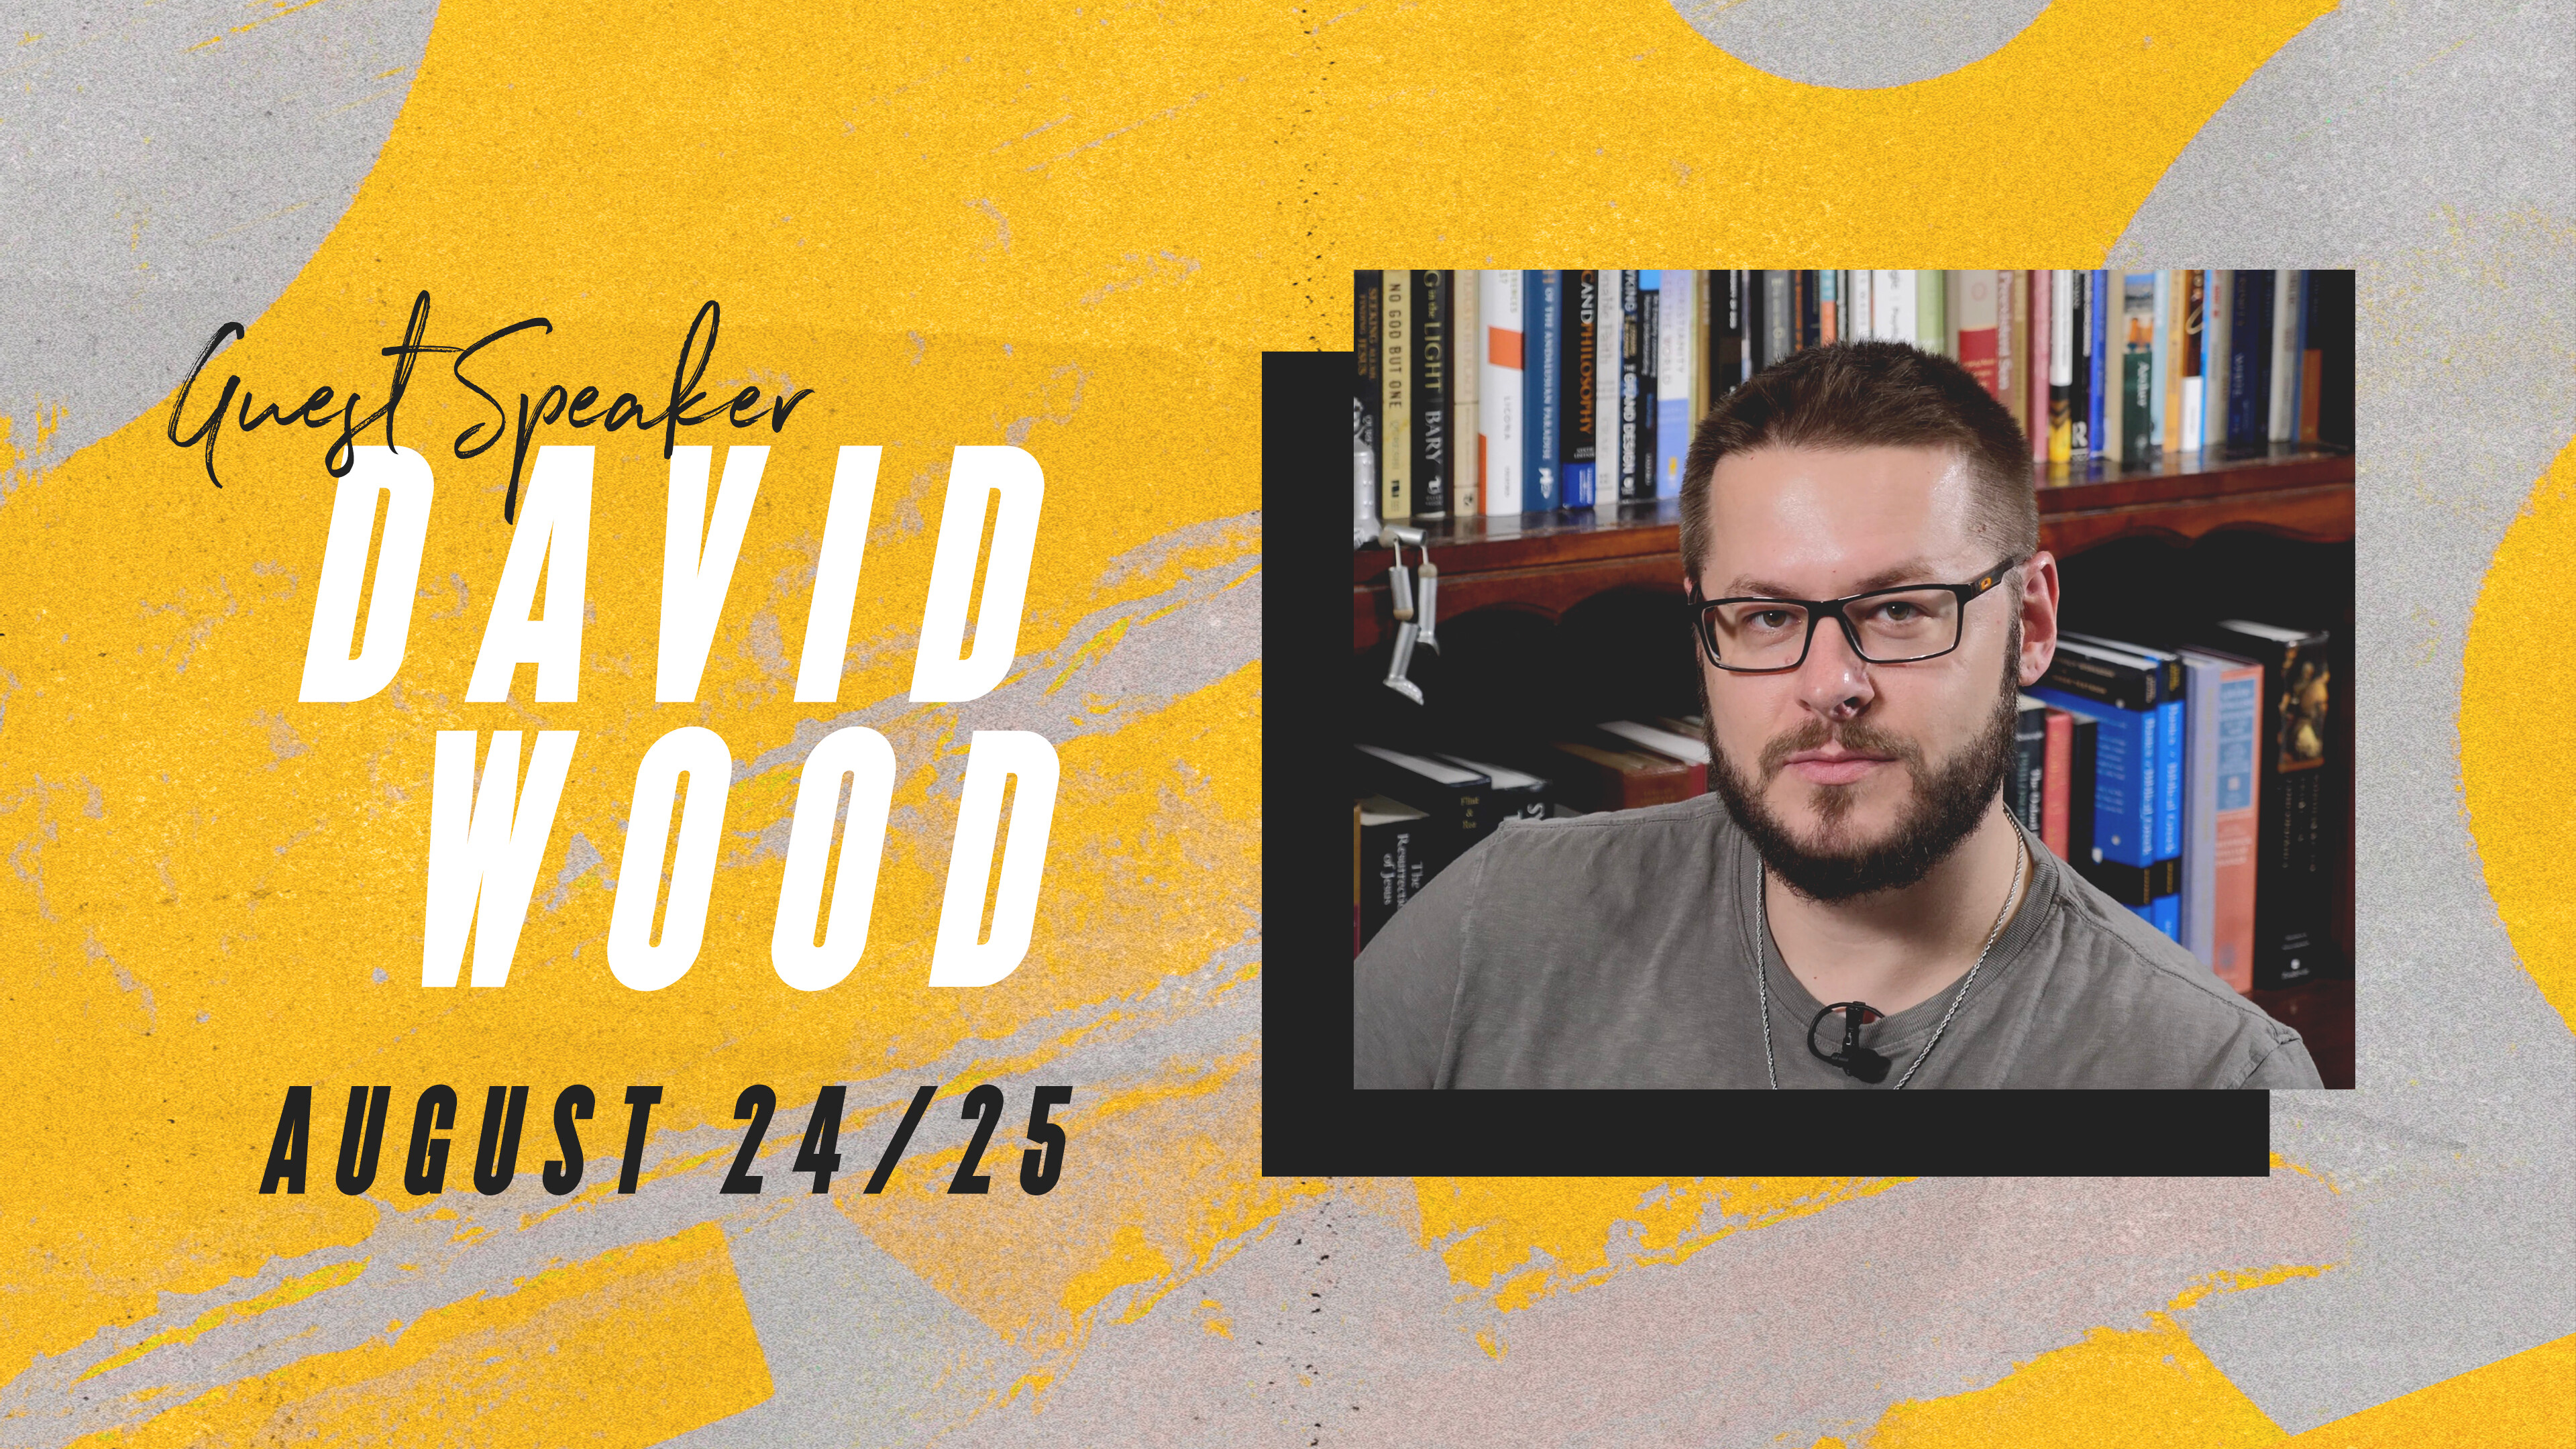 Guest Speaker: David Wood